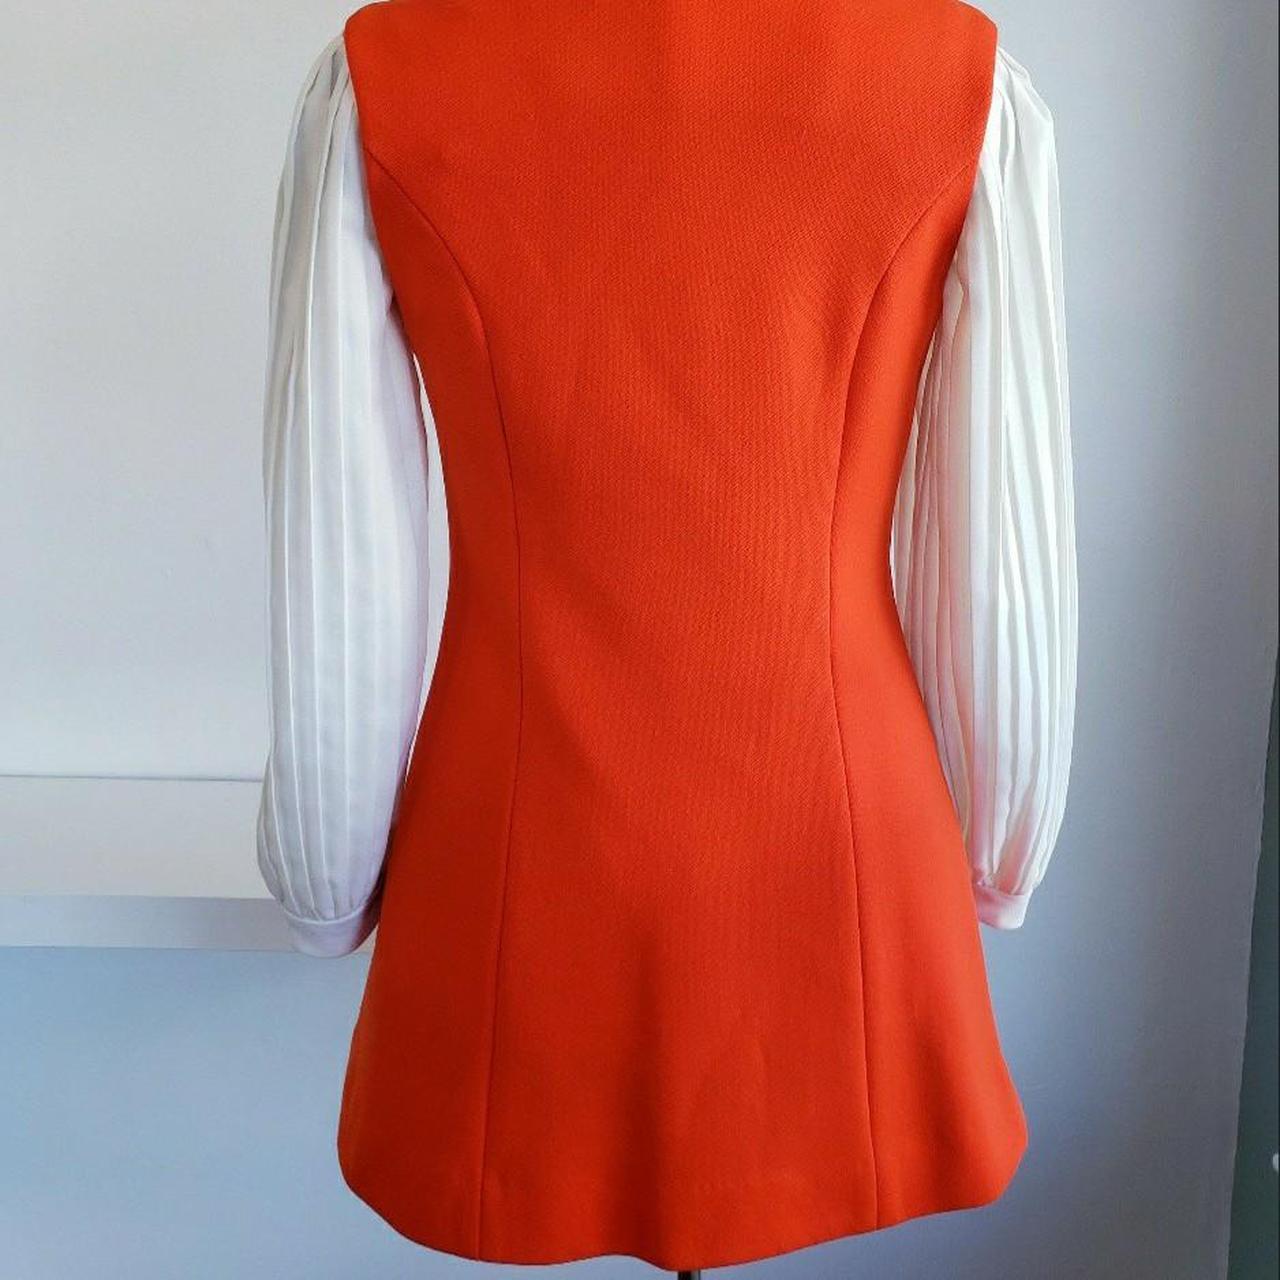 American Vintage Women's White and Orange Suit (7)